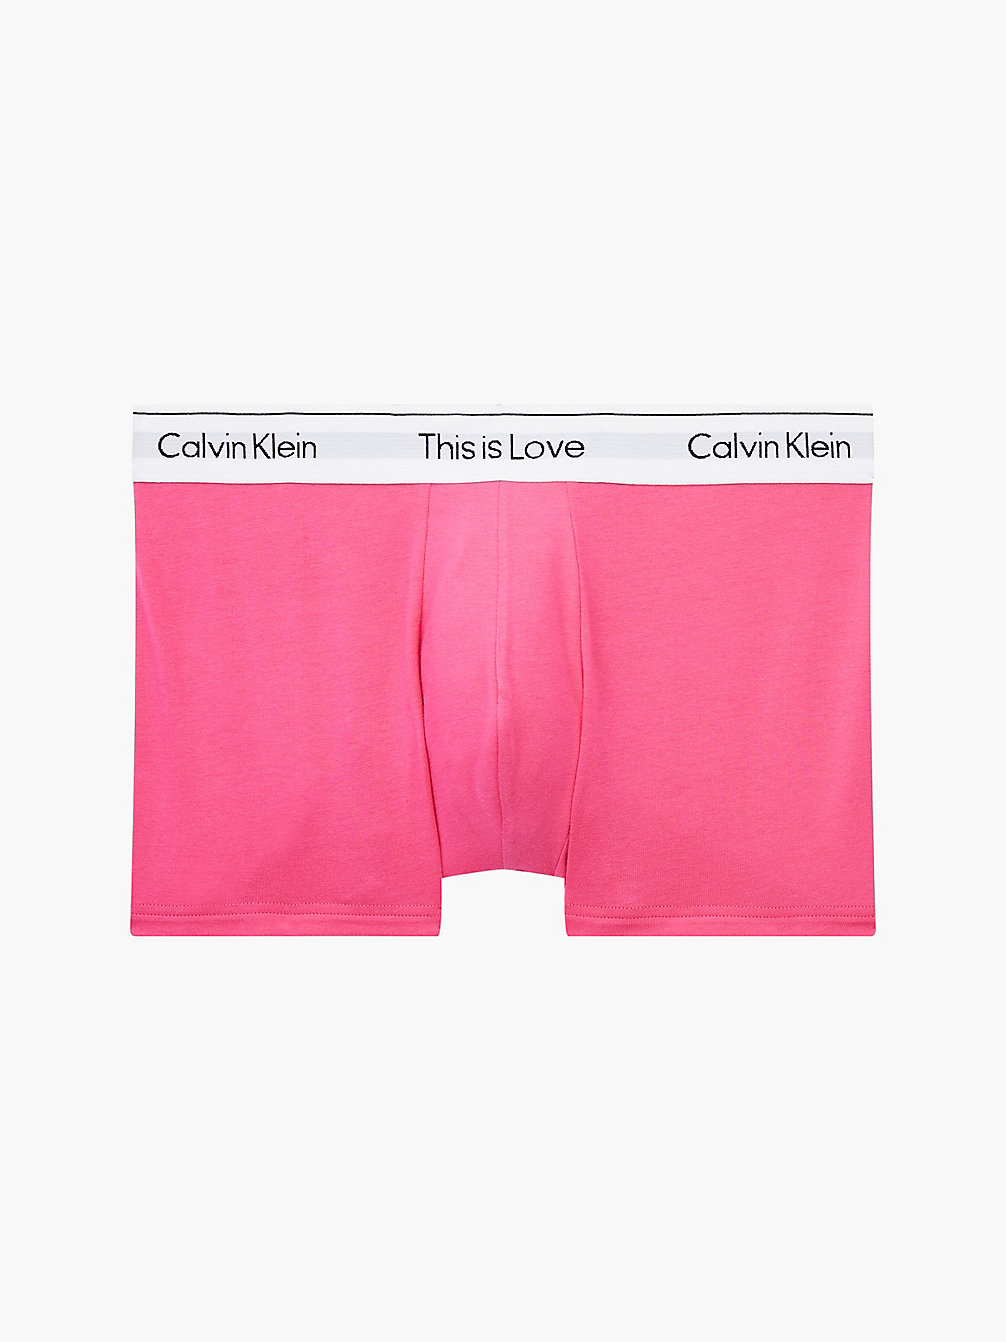 PINK FLAMBE Trunks - Pride undefined men Calvin Klein